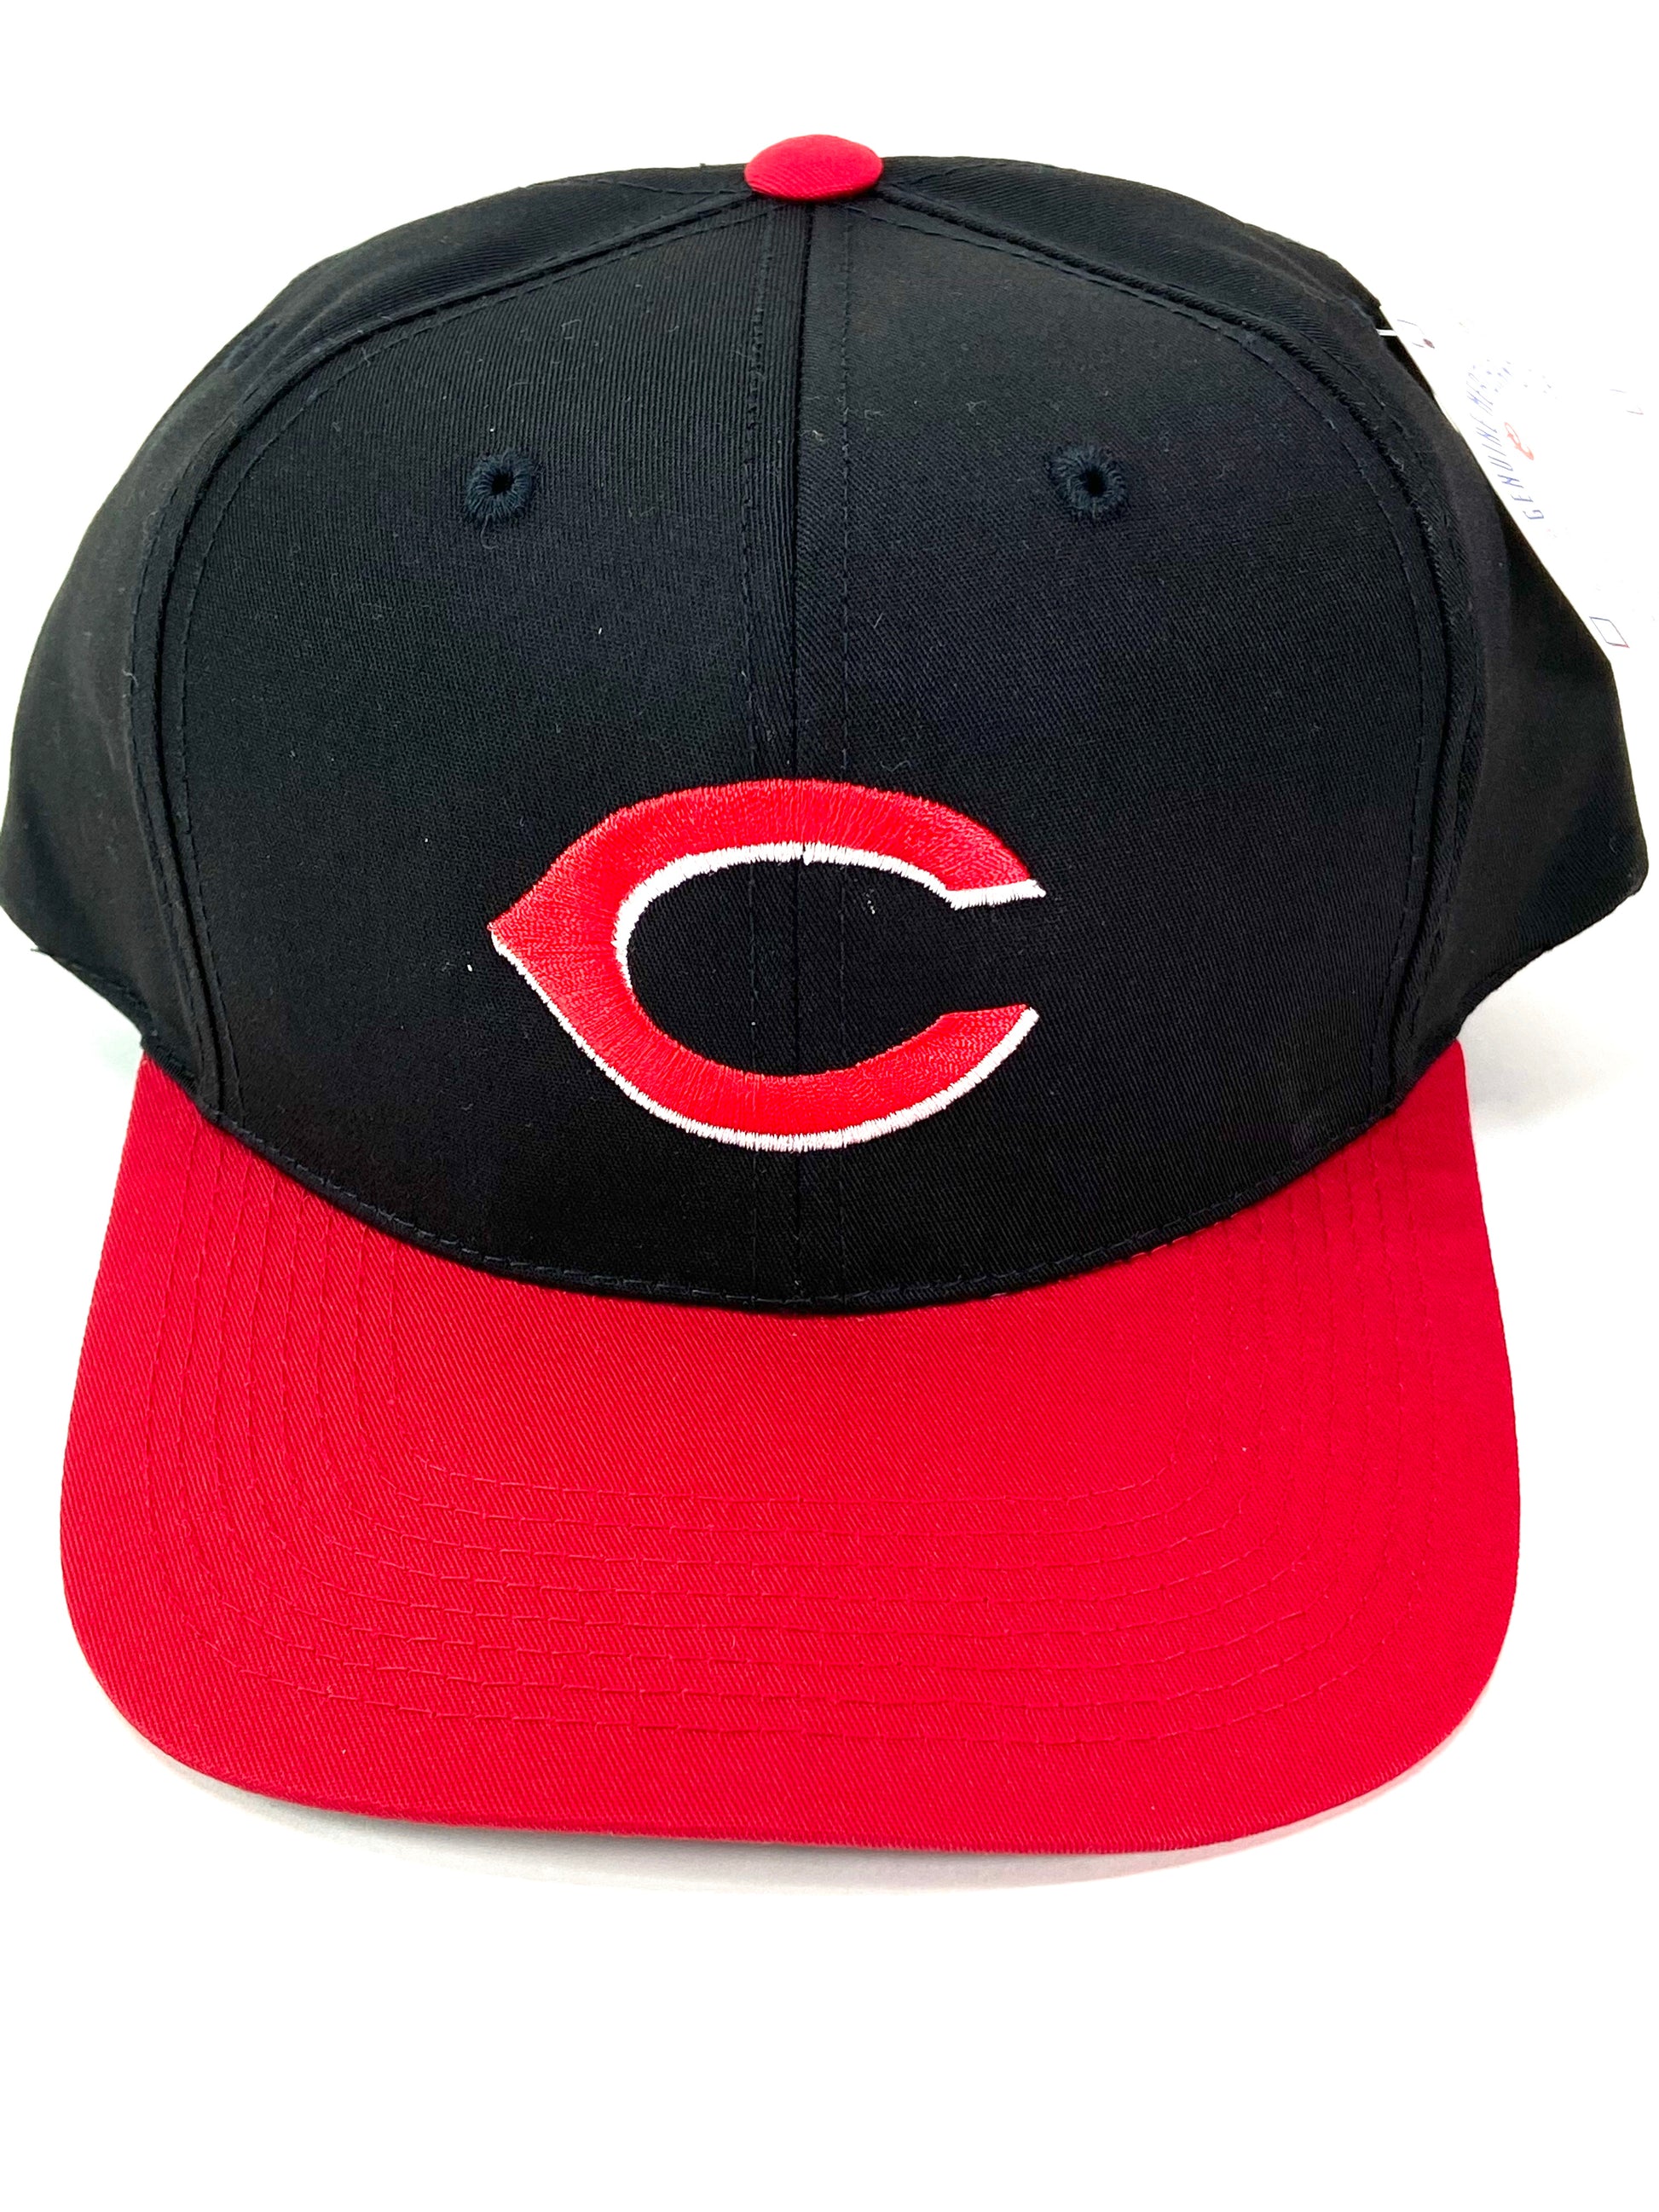 Cincinnati Reds Hat Fitted 7 1/4 White Red Brim MLB American Needle